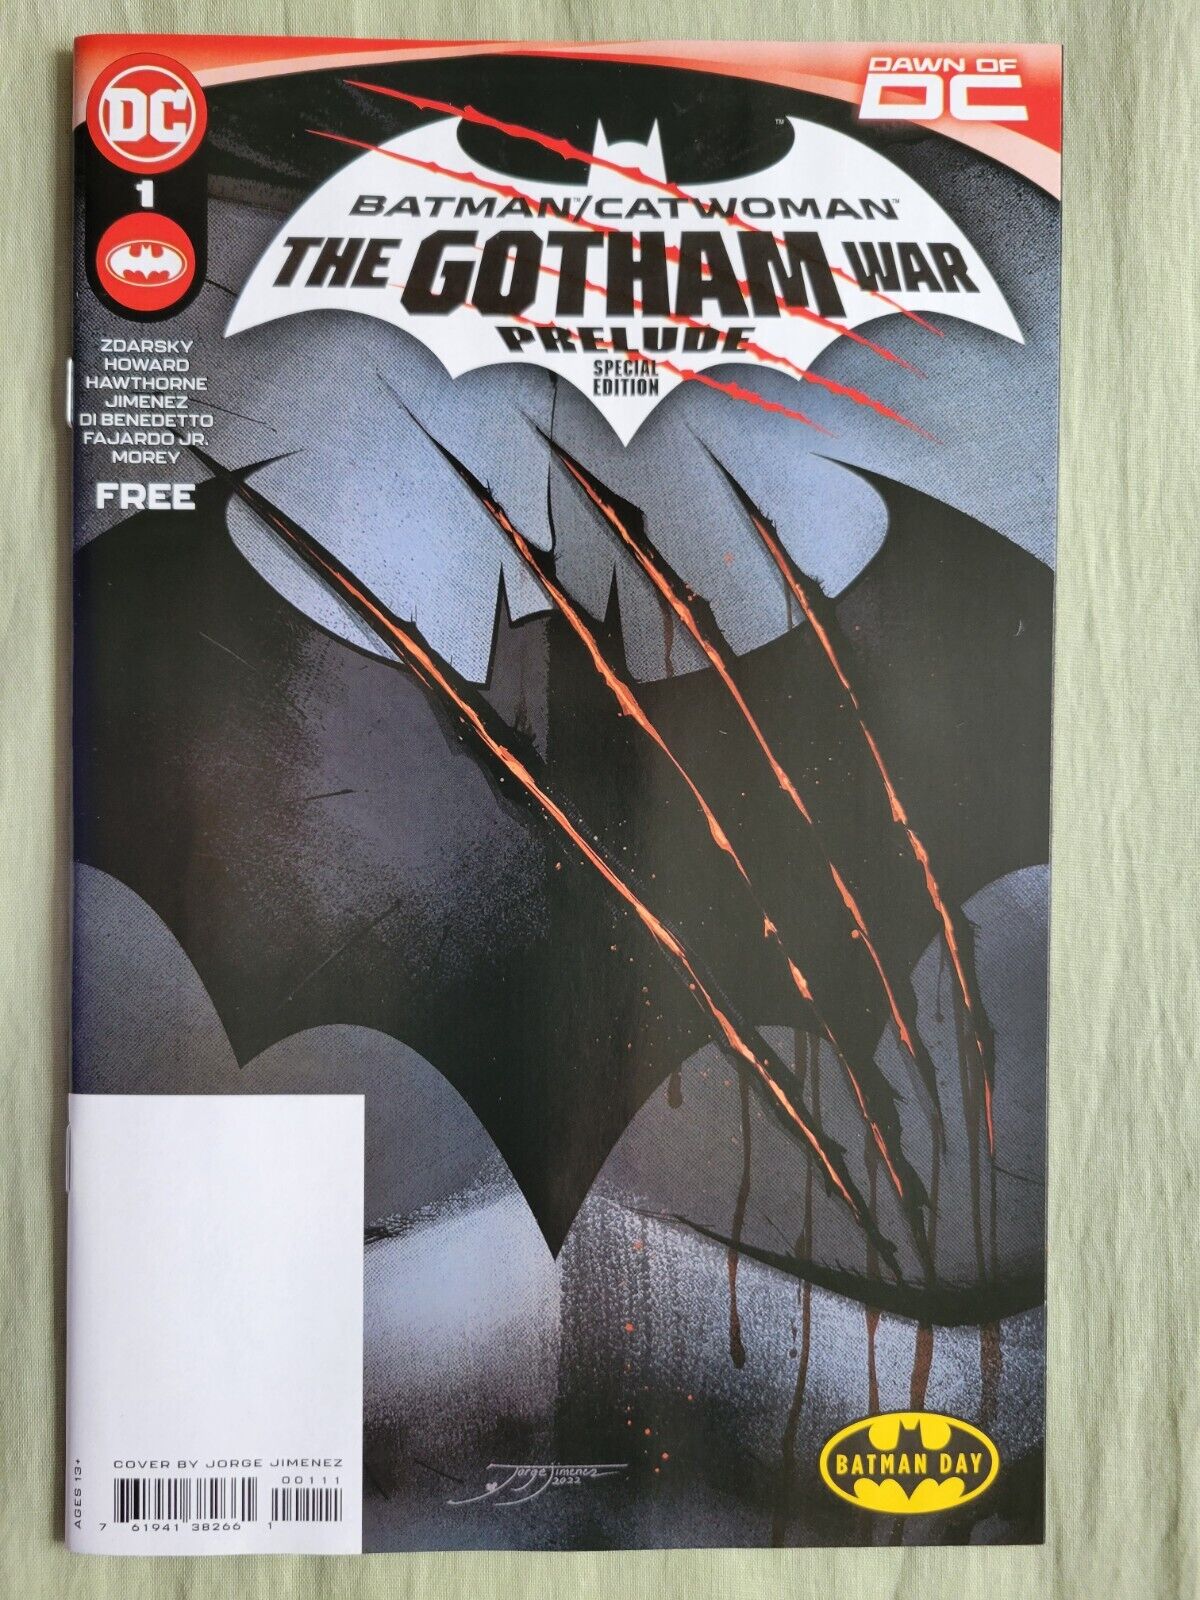 Batman/Catwoman: The Gotham War Prelude #1 Batman Day Special Edition